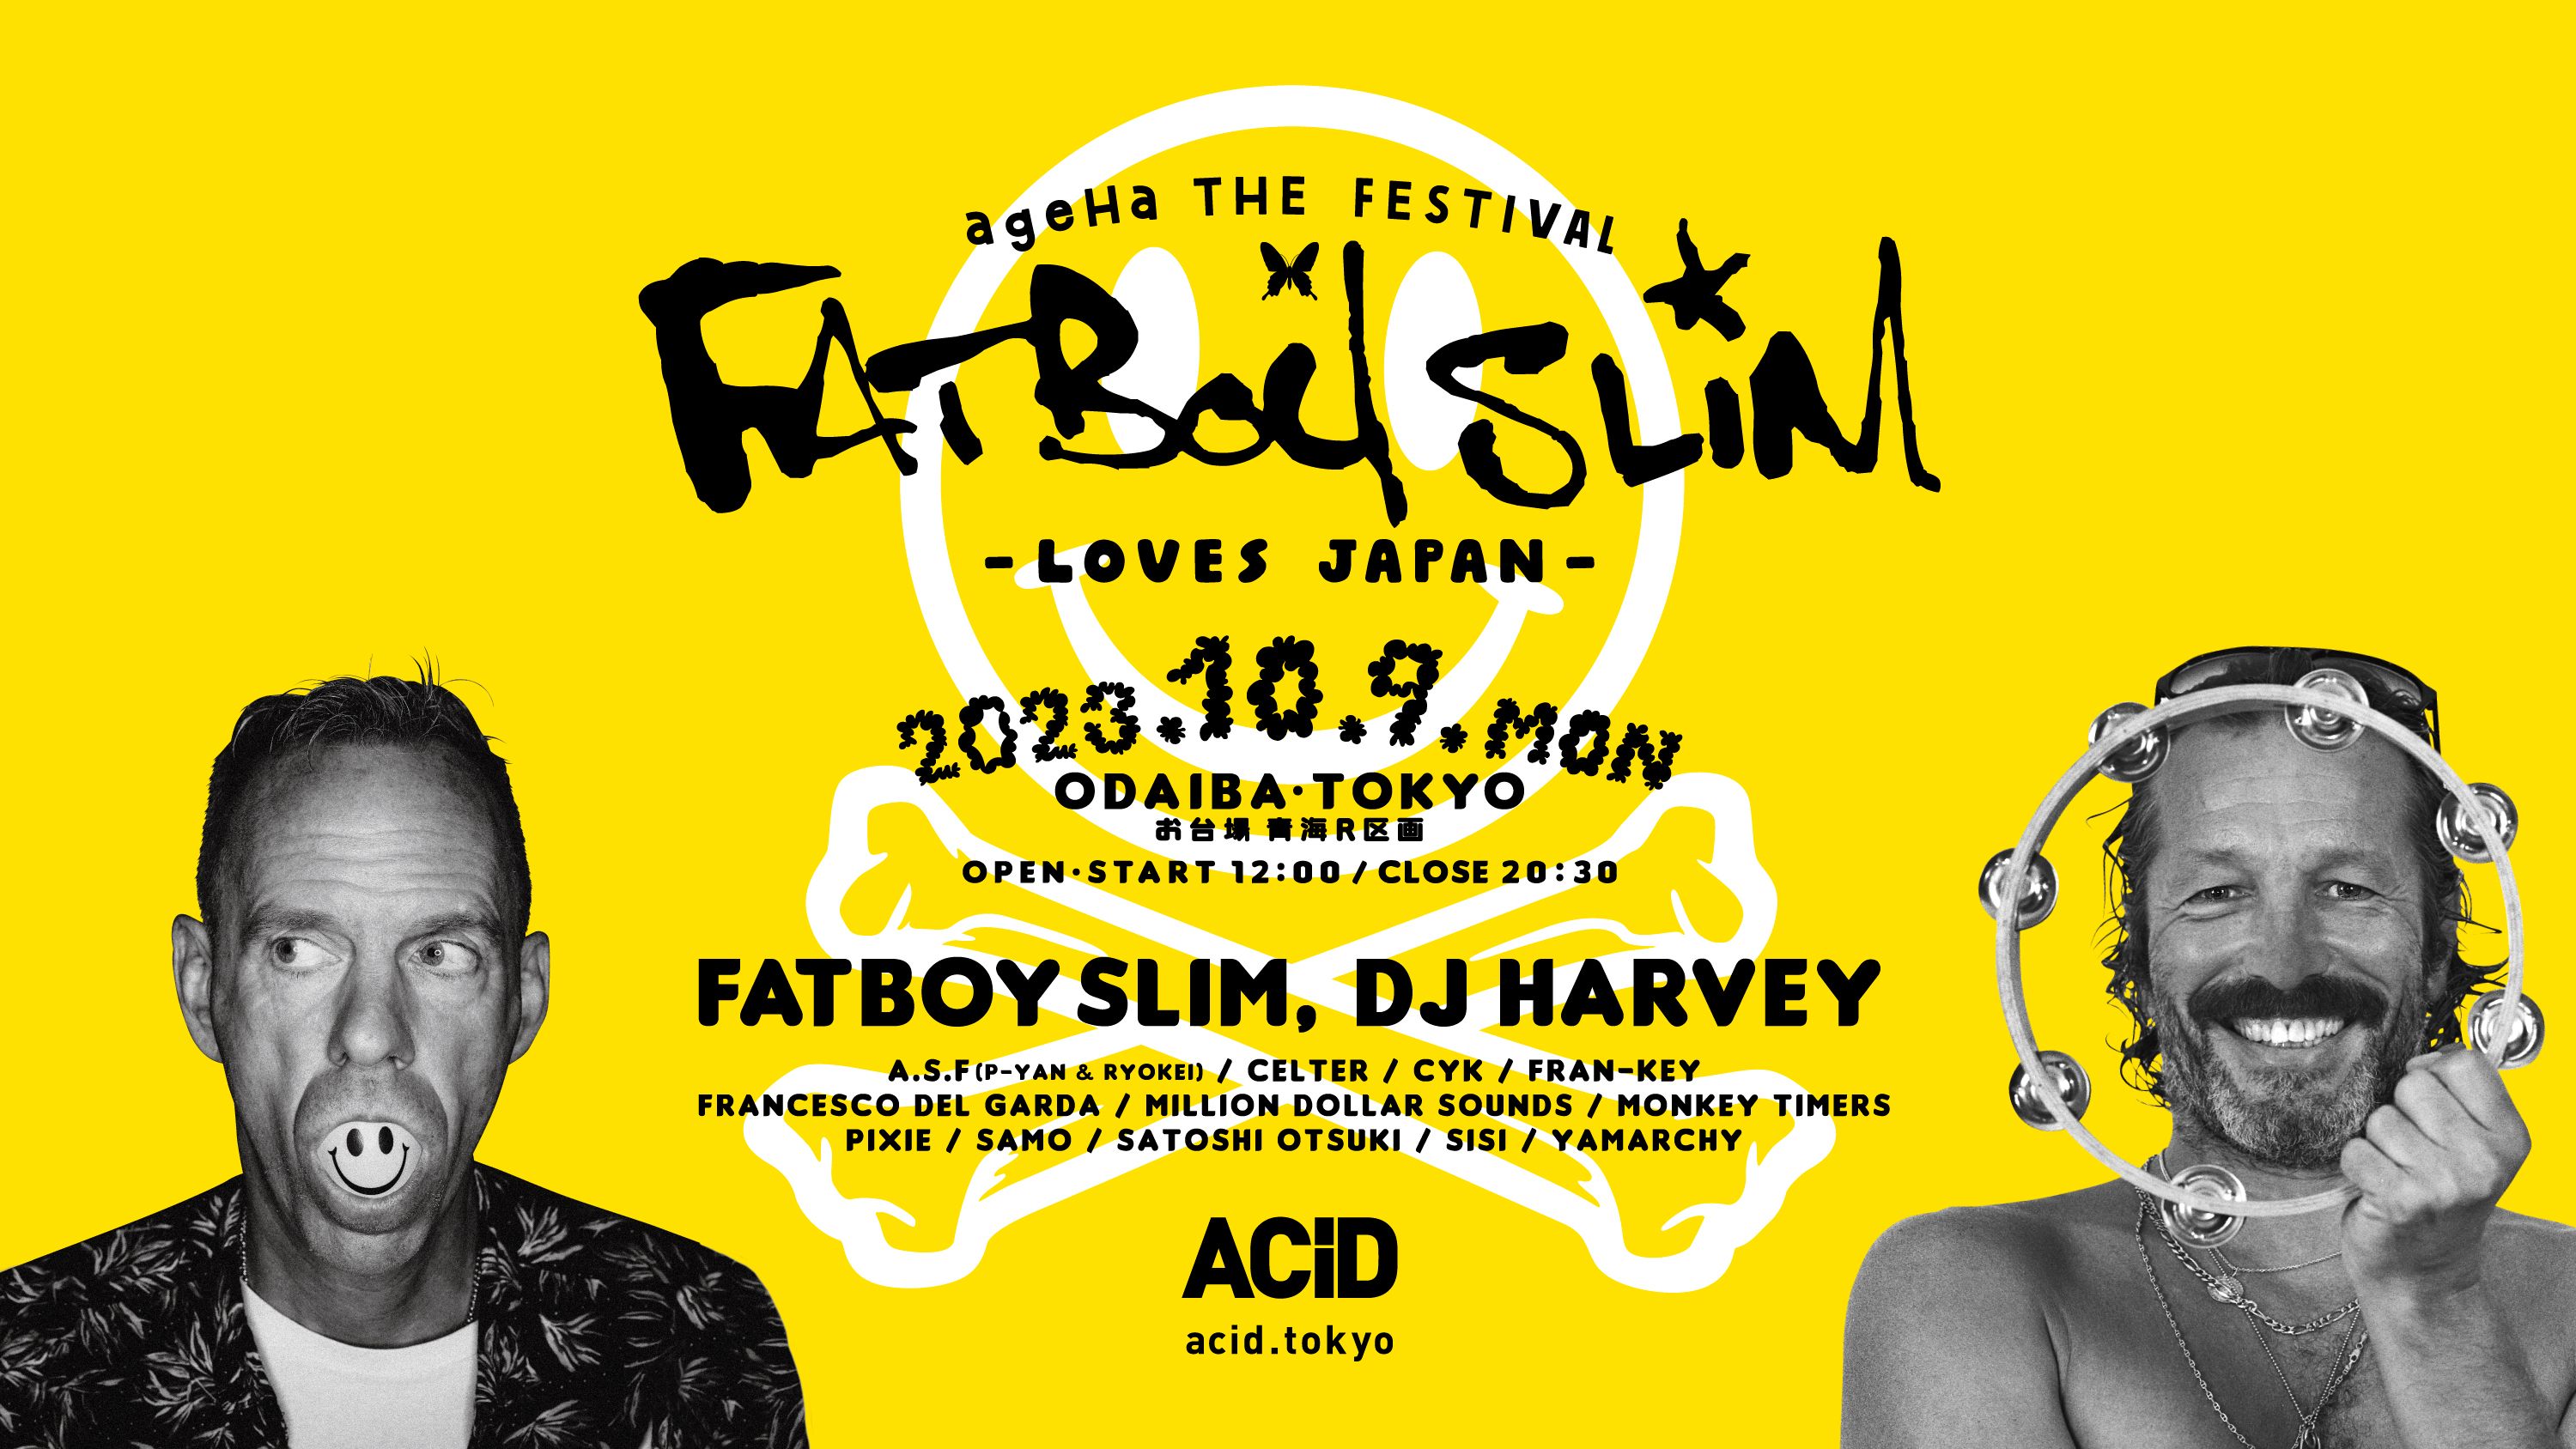 ageHa THE FESTIVAL - FATBOY SLIM LOVES JAPAN